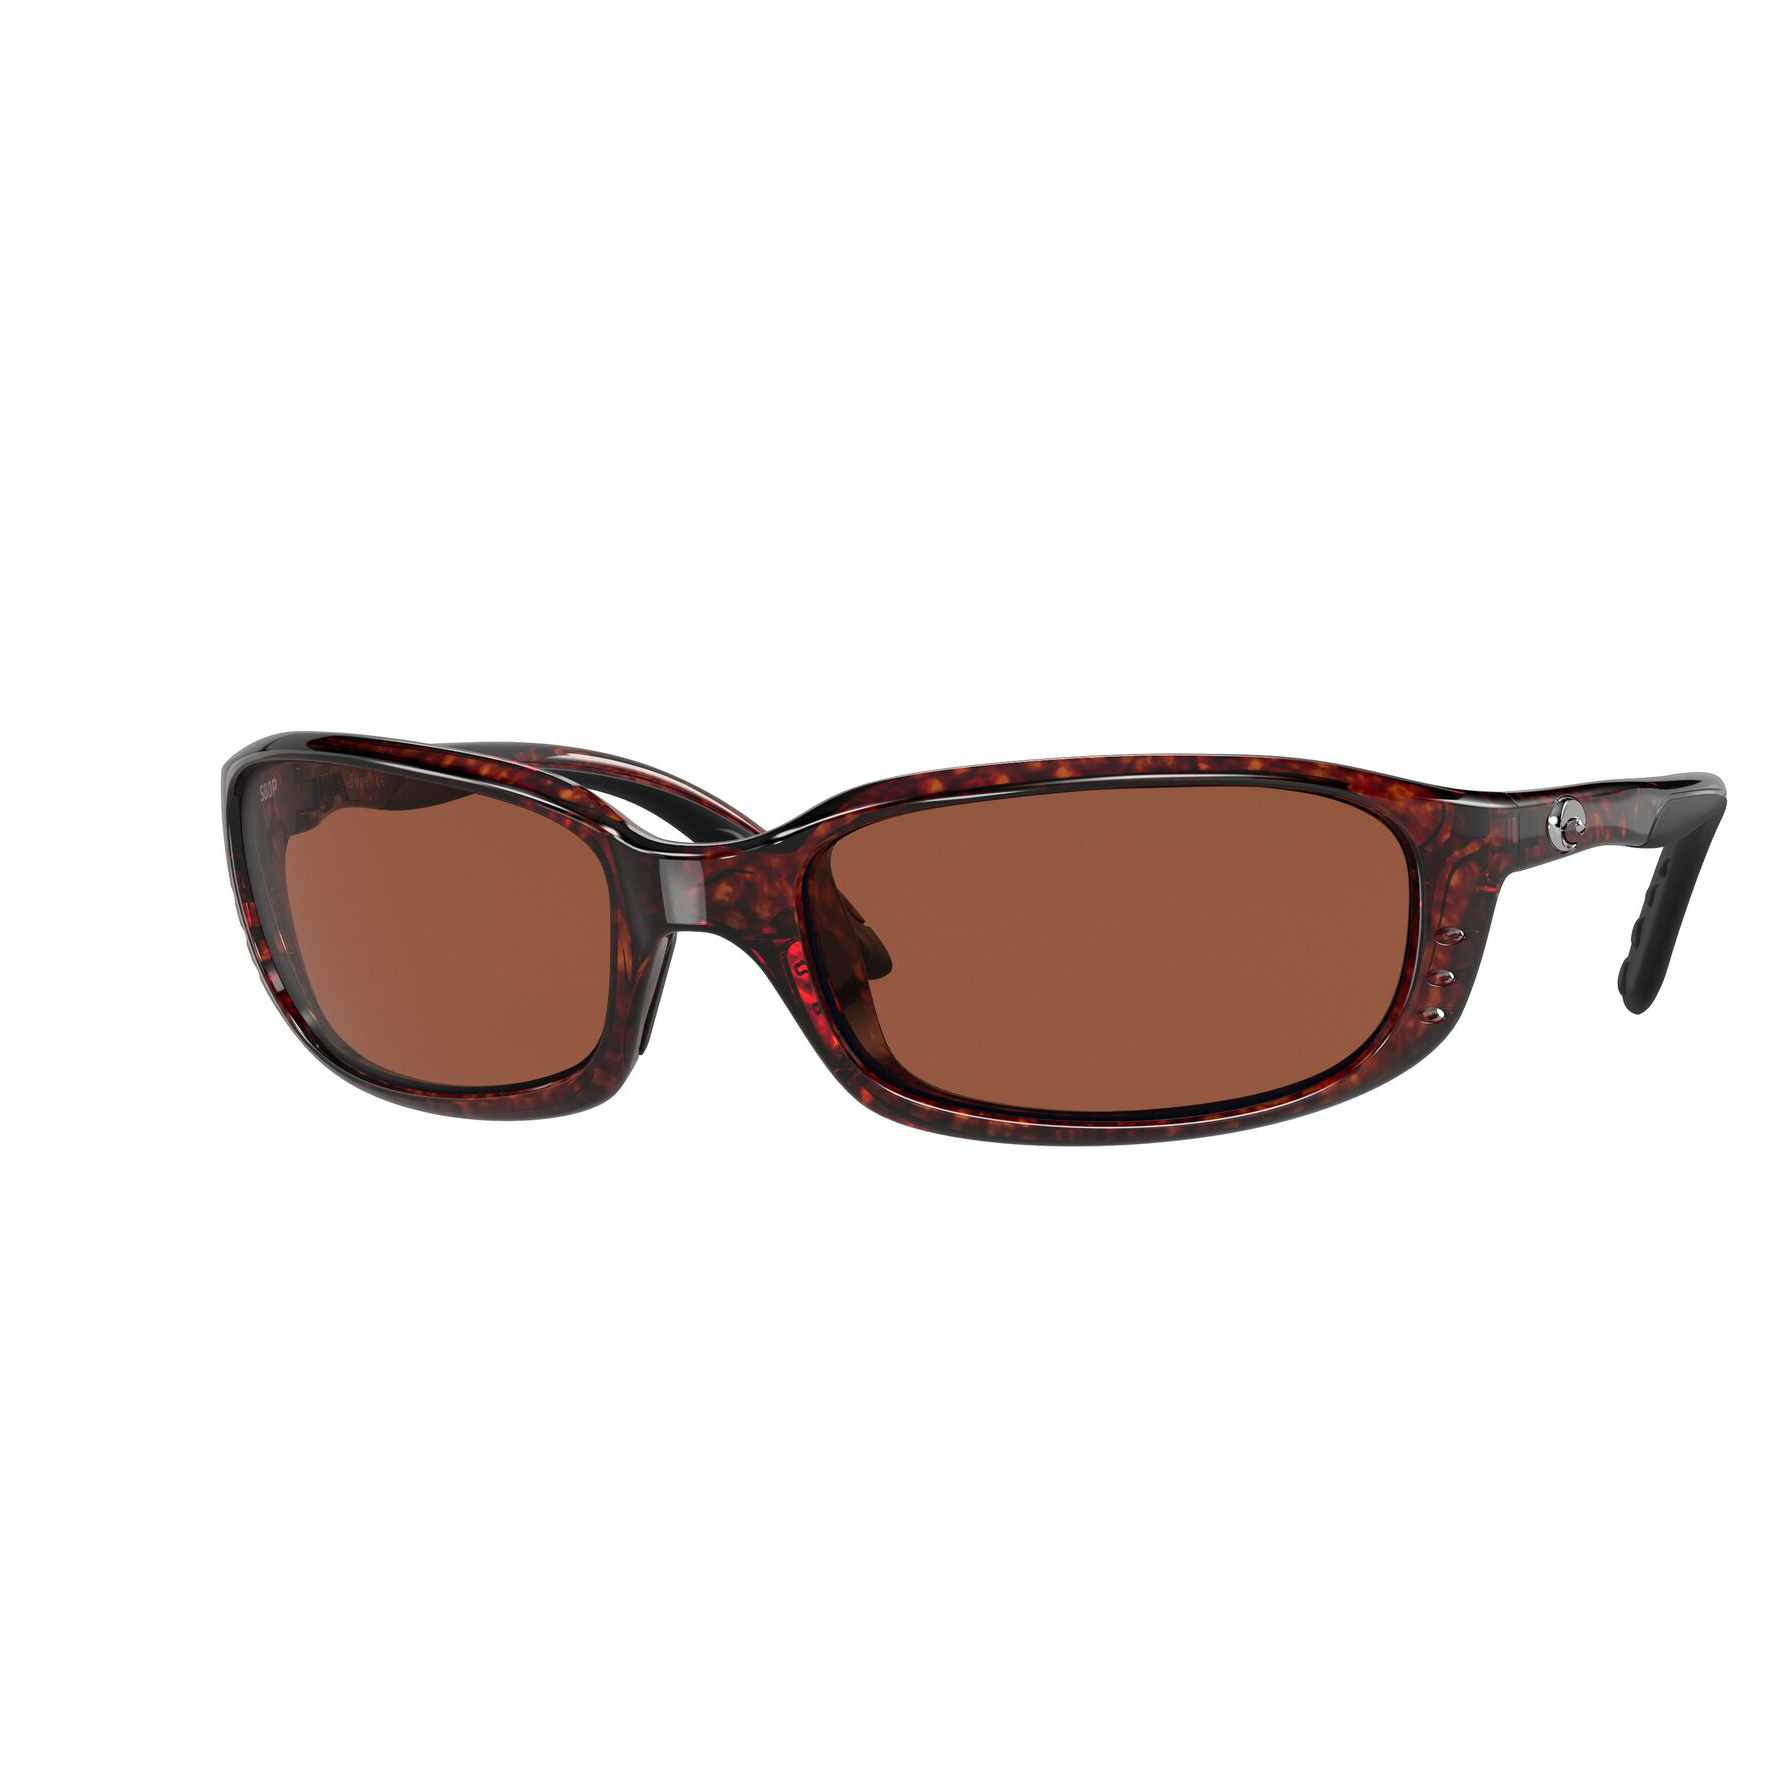 Costa Sunglasses, Brine, Tortoise, Copper, 580P